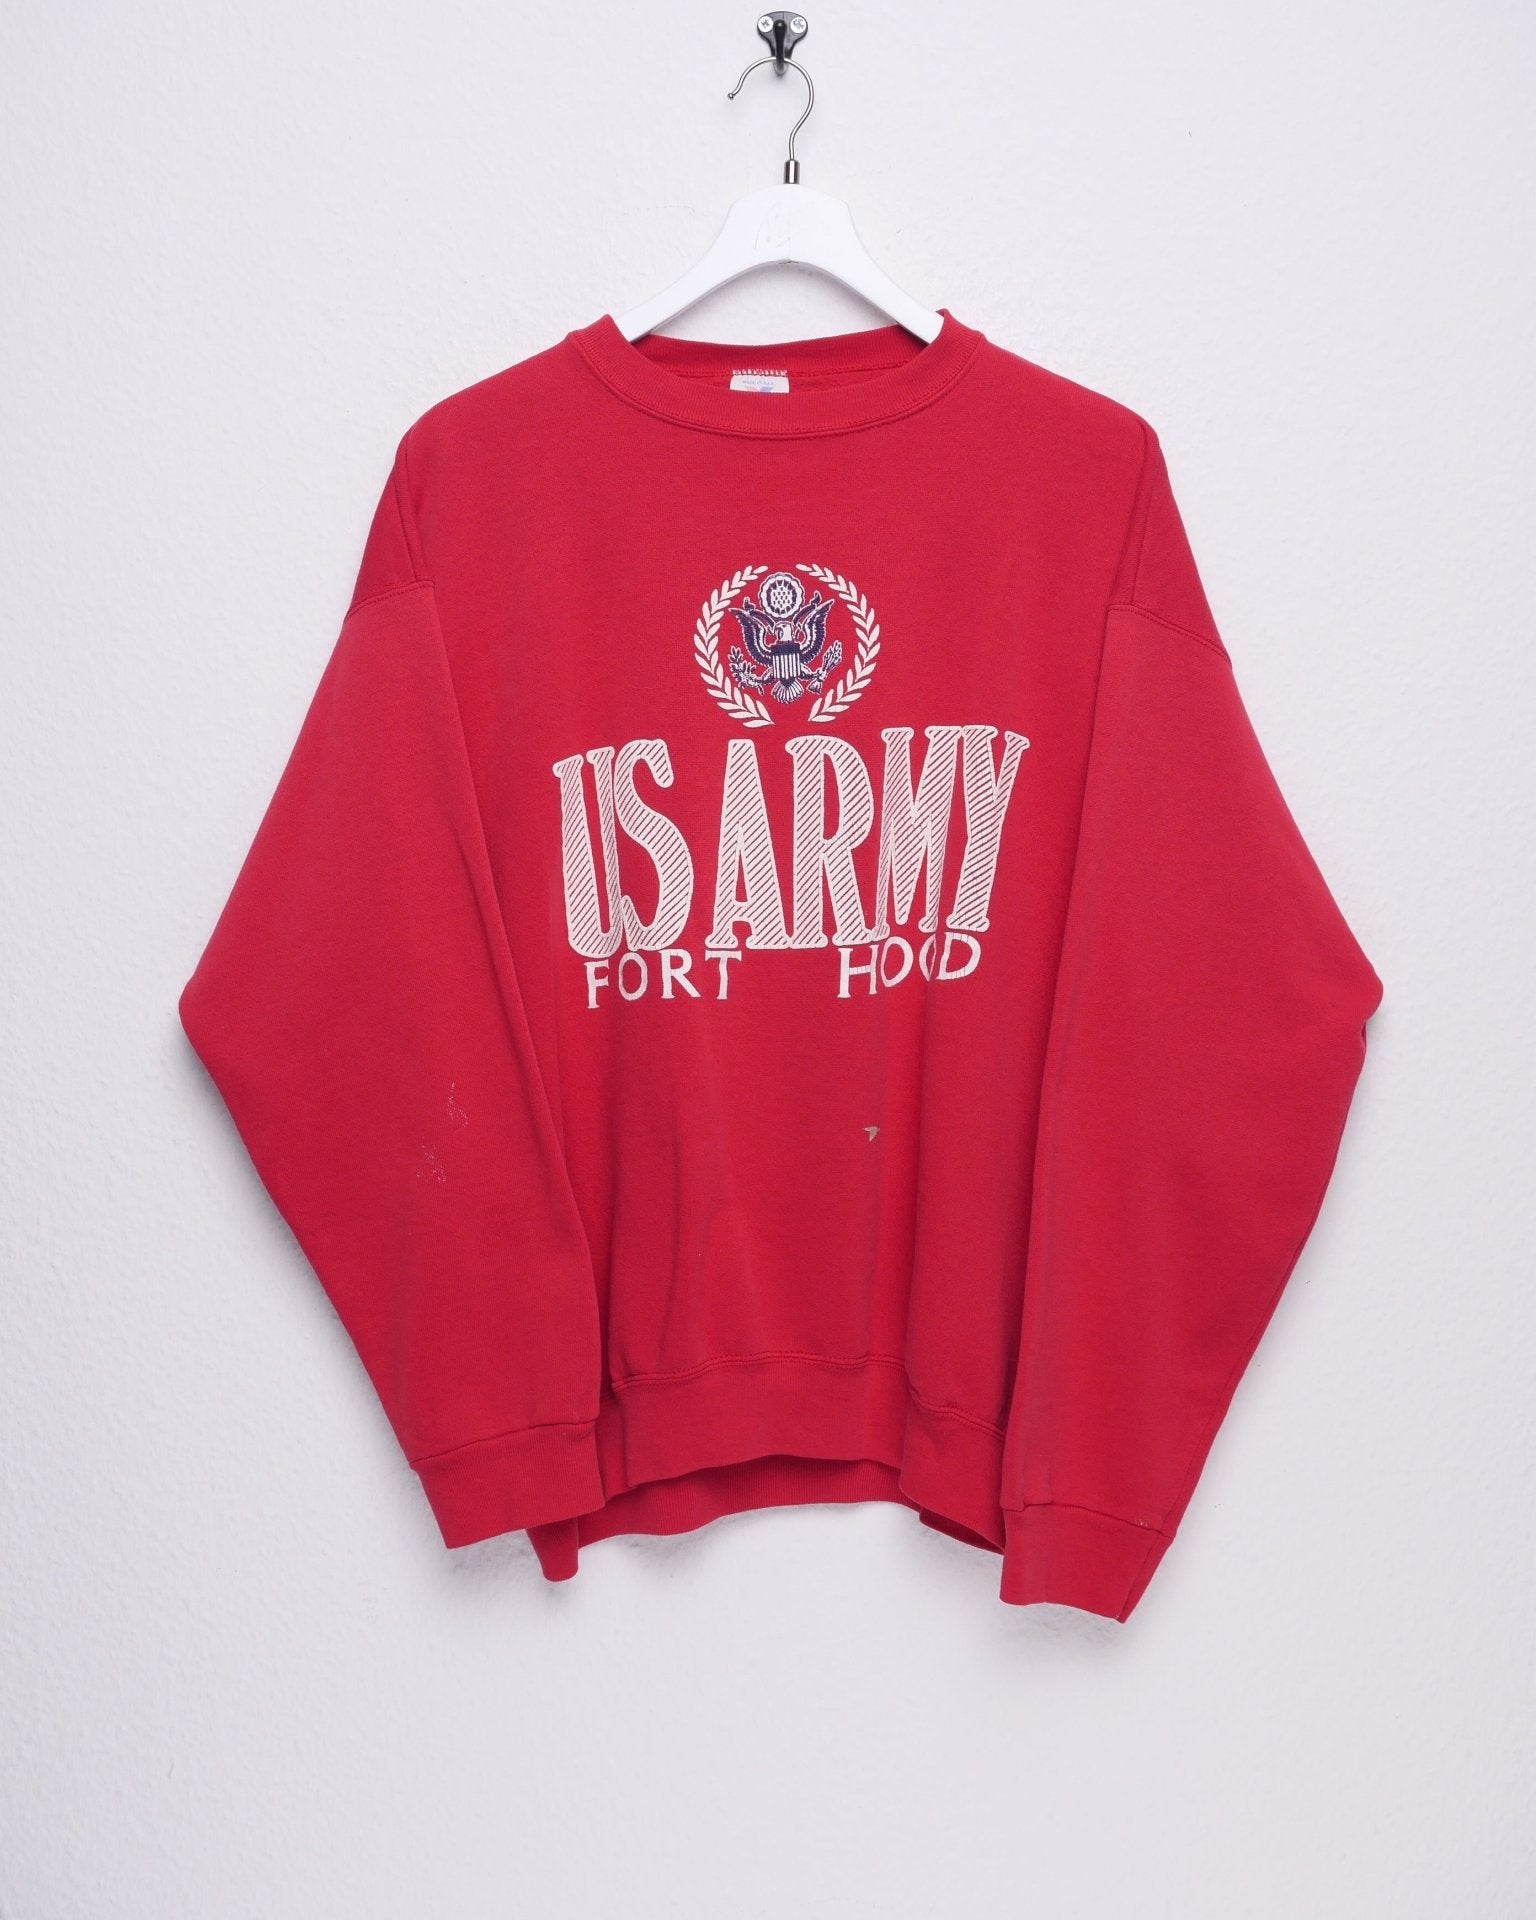 US Army Fort Hood printed Logo Sweater - Peeces